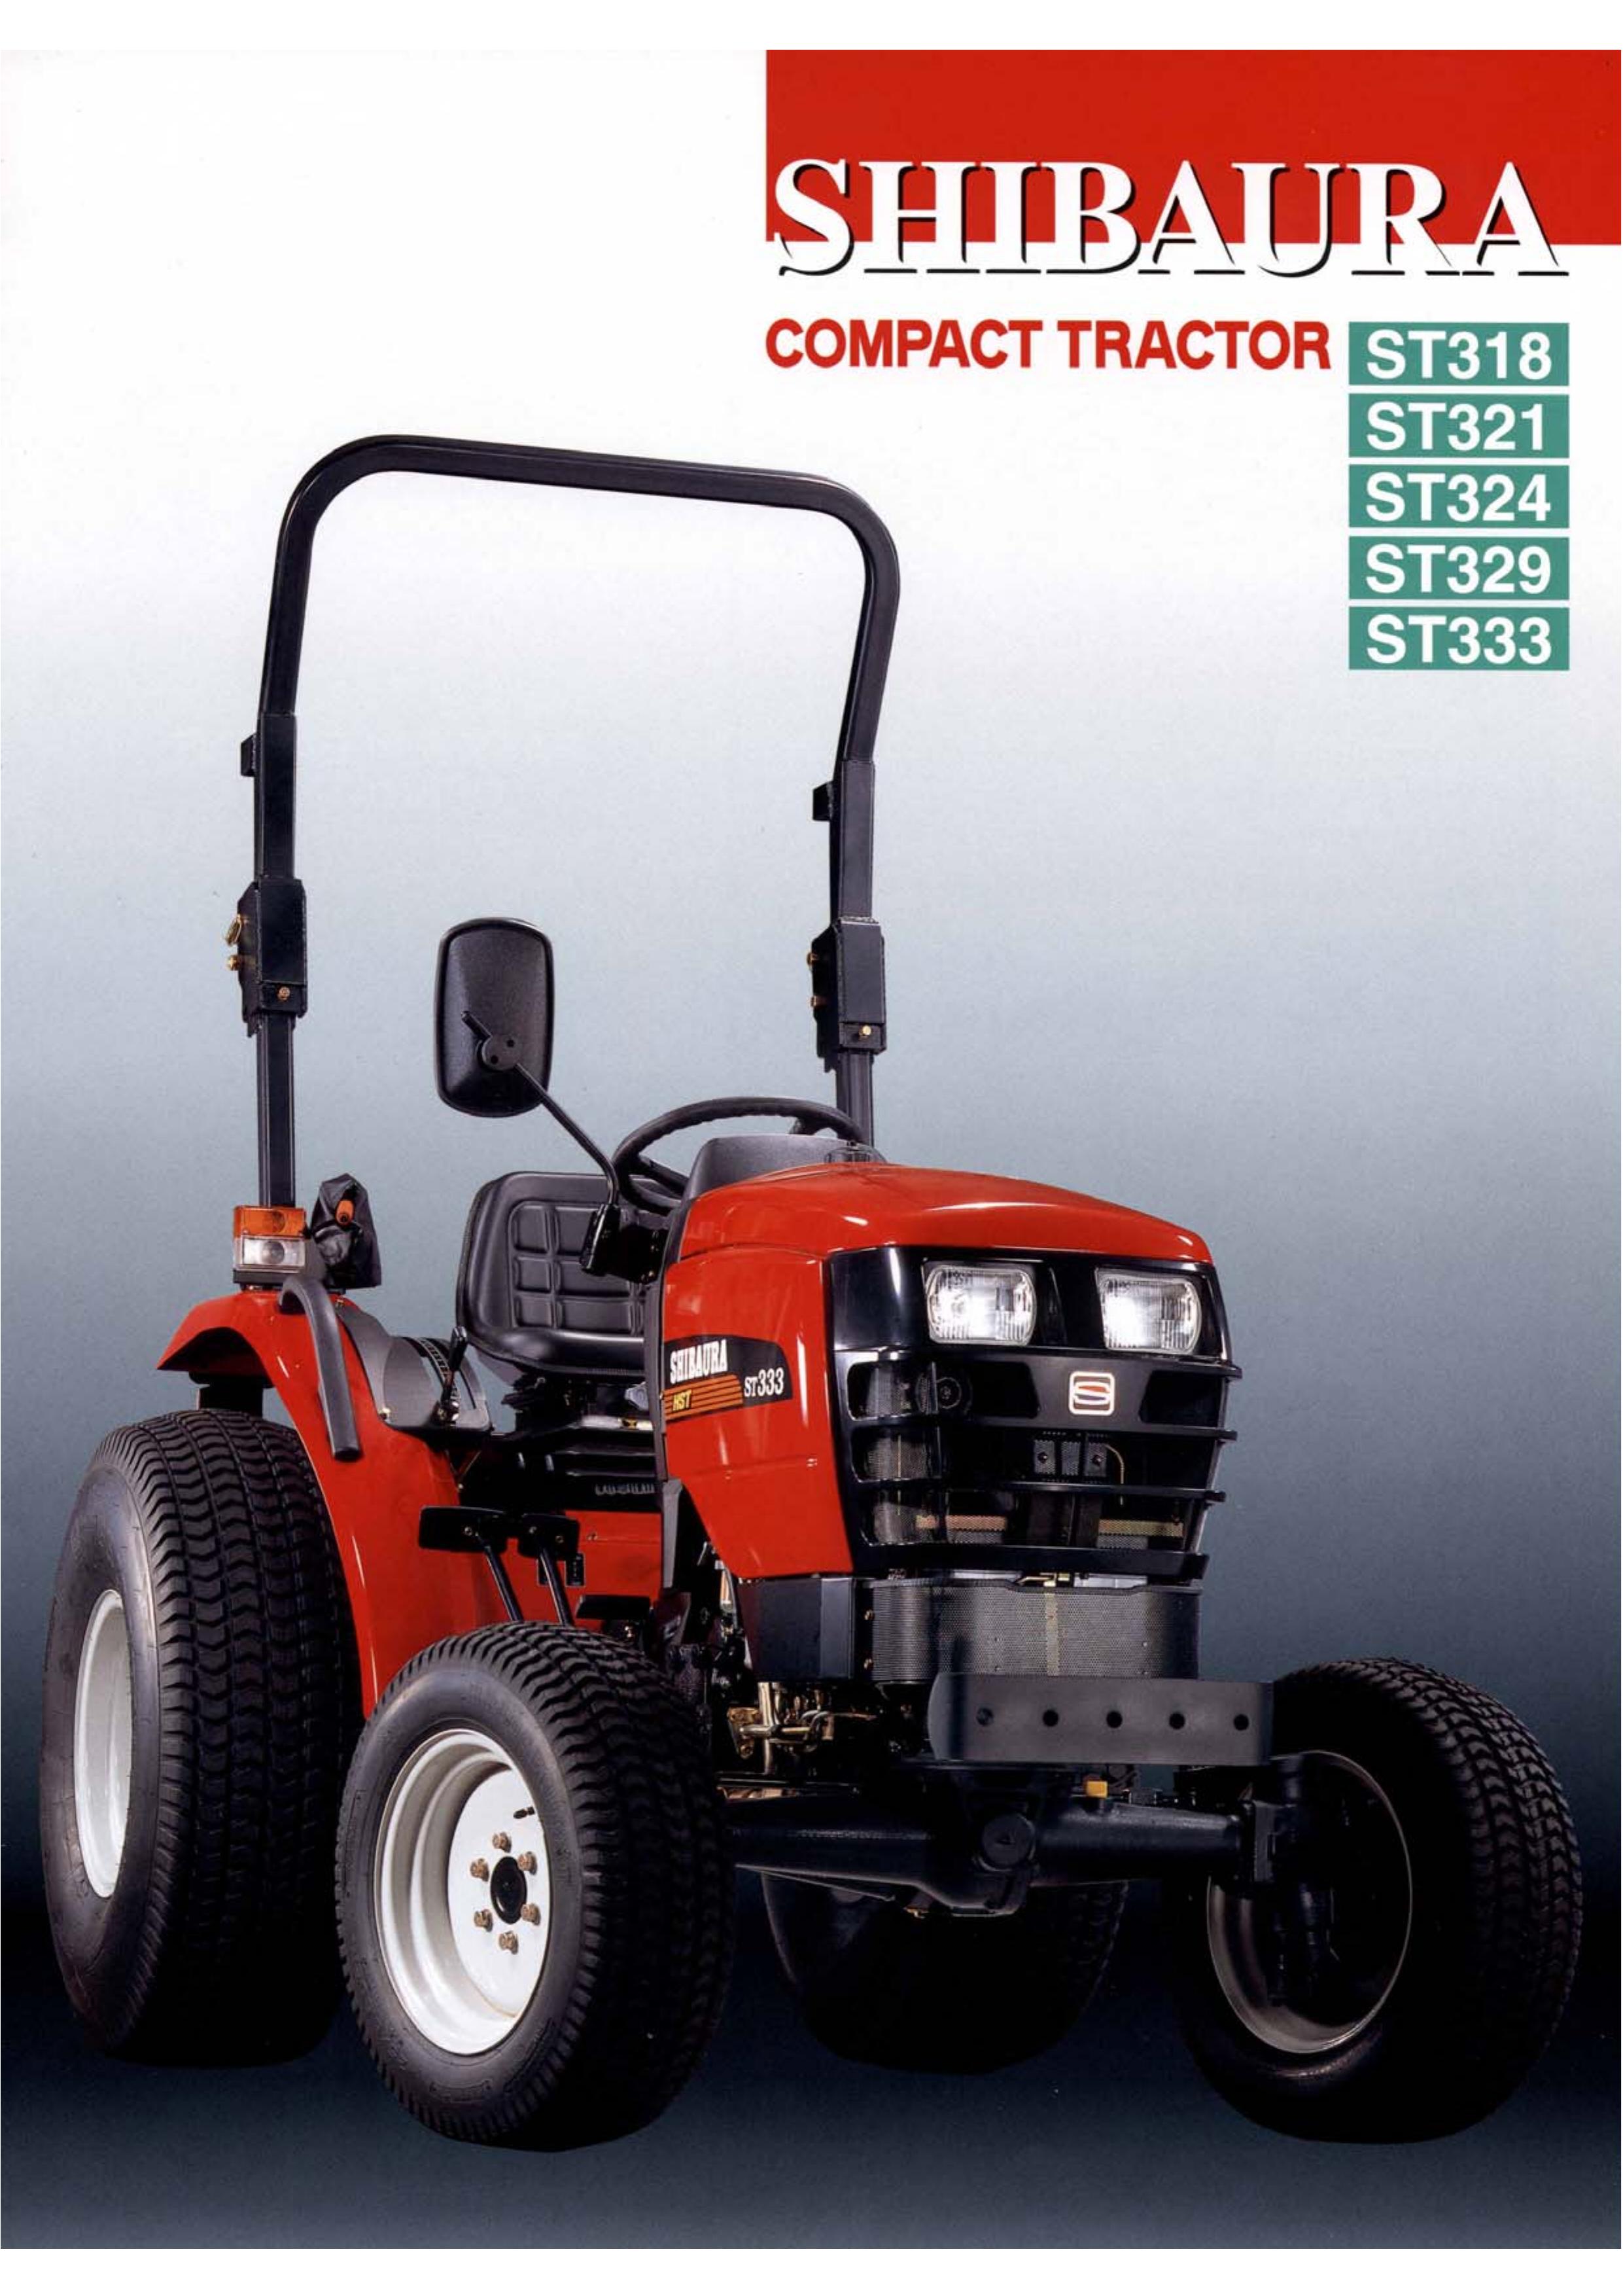 Shibaura ST329 Lawn Mower User Manual